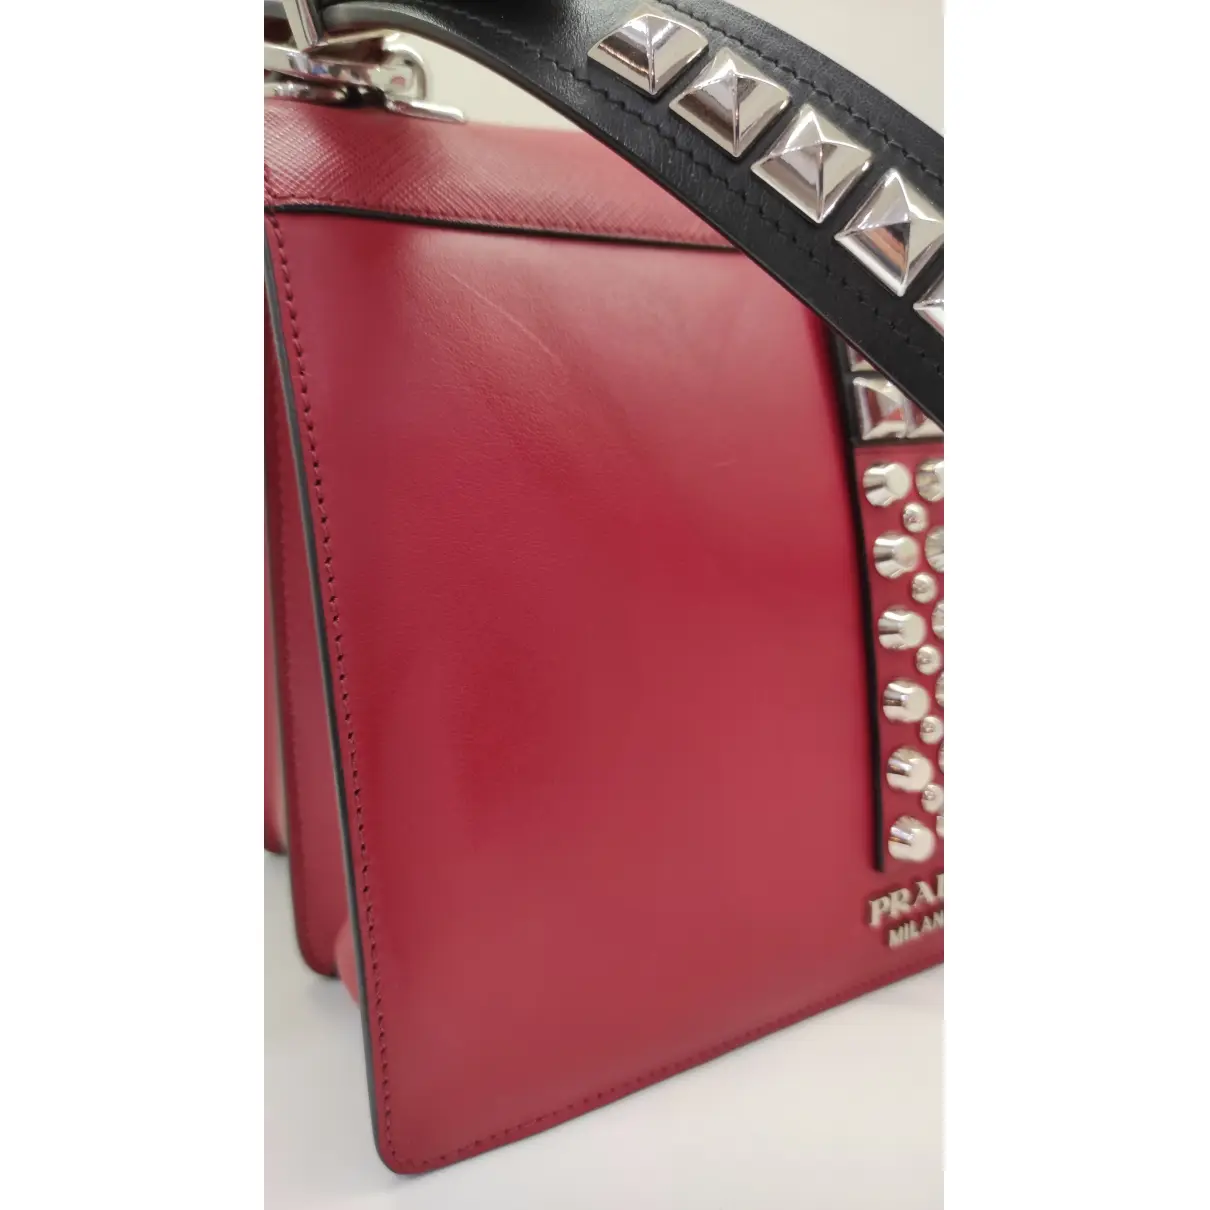 Elektra leather handbag Prada